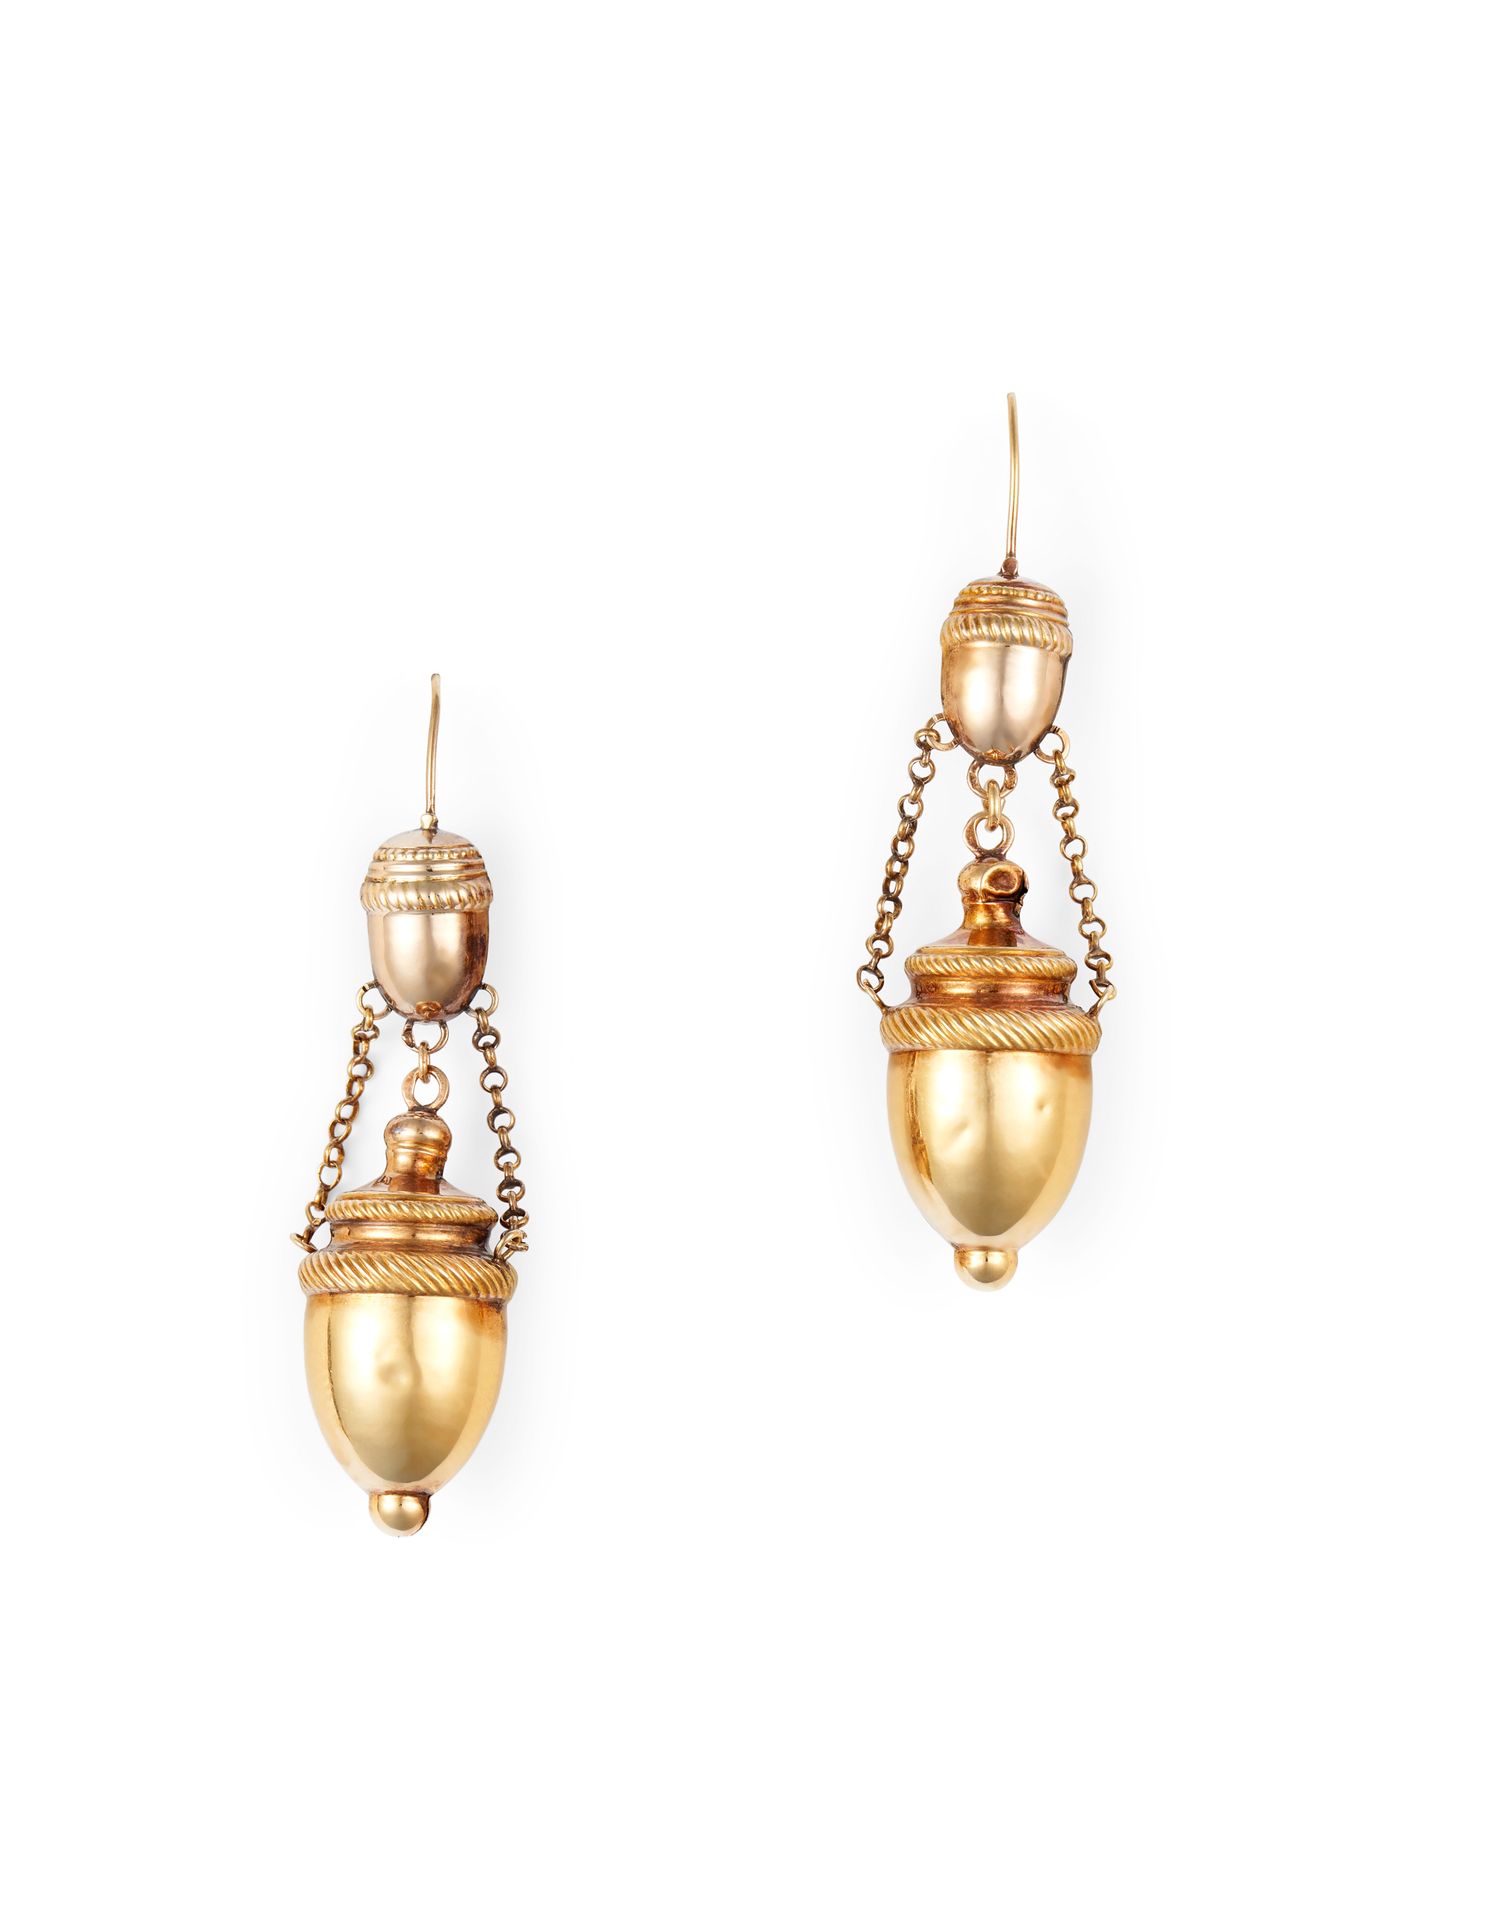 Null AMPHORA耳环 18K黄金，描绘了由2条链子连接到一个橡树果实的amphora。19世纪。

印章。法国，犀牛头

直径：5.5厘米 - Tw:4&hellip;